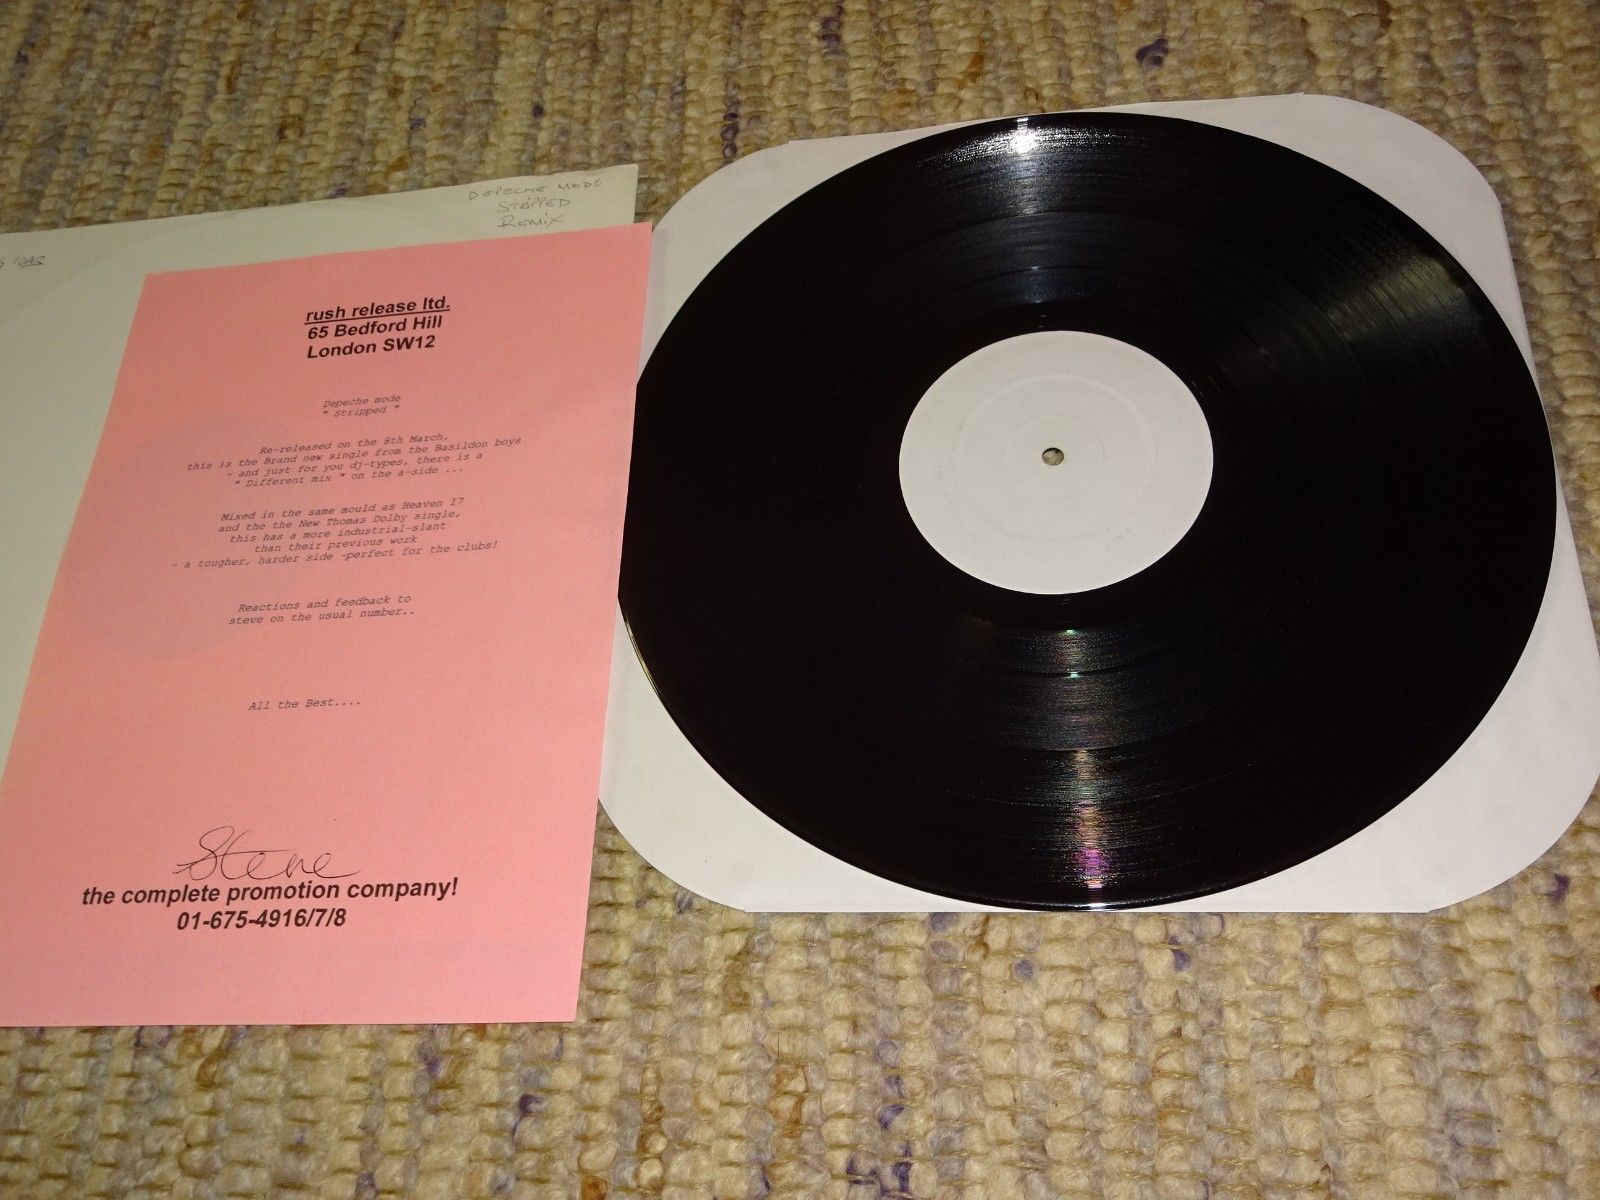 popsike.com - DEPECHE MODE STRIPPED UK White Label 12" Vinyl with Promo Sheet 12 BONG 10 - auction details